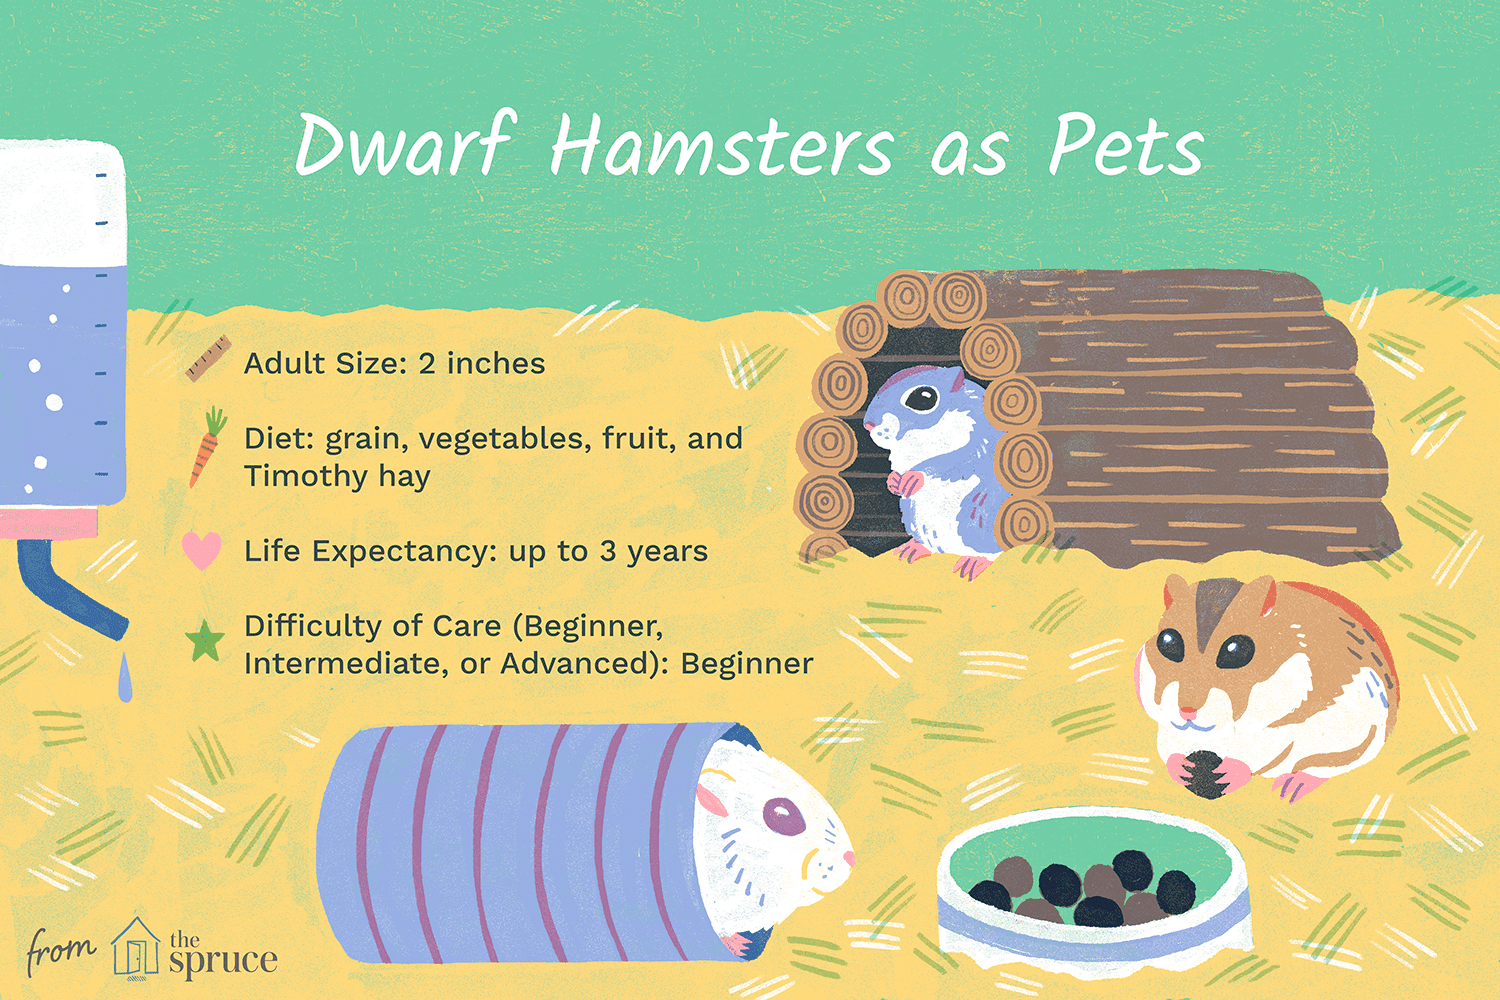 dwarf hamsters as pets illustration